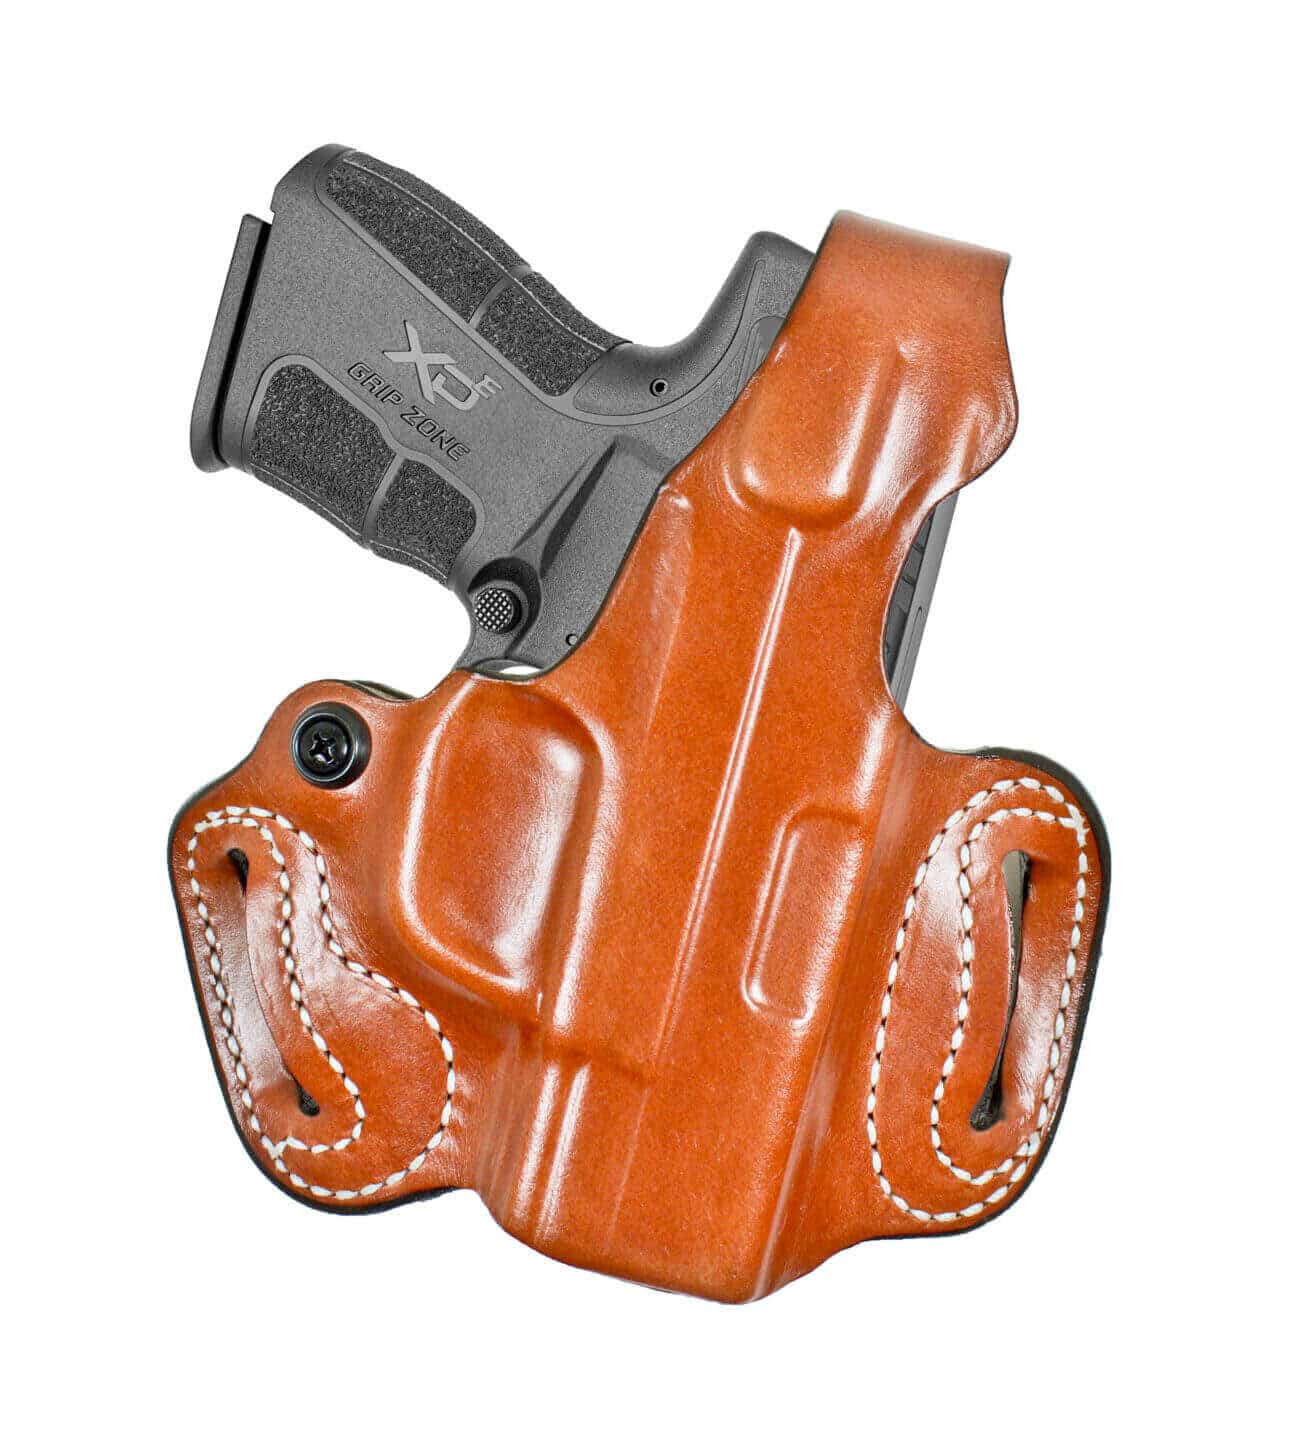 Thumb break holster with Hellcat pistol in it